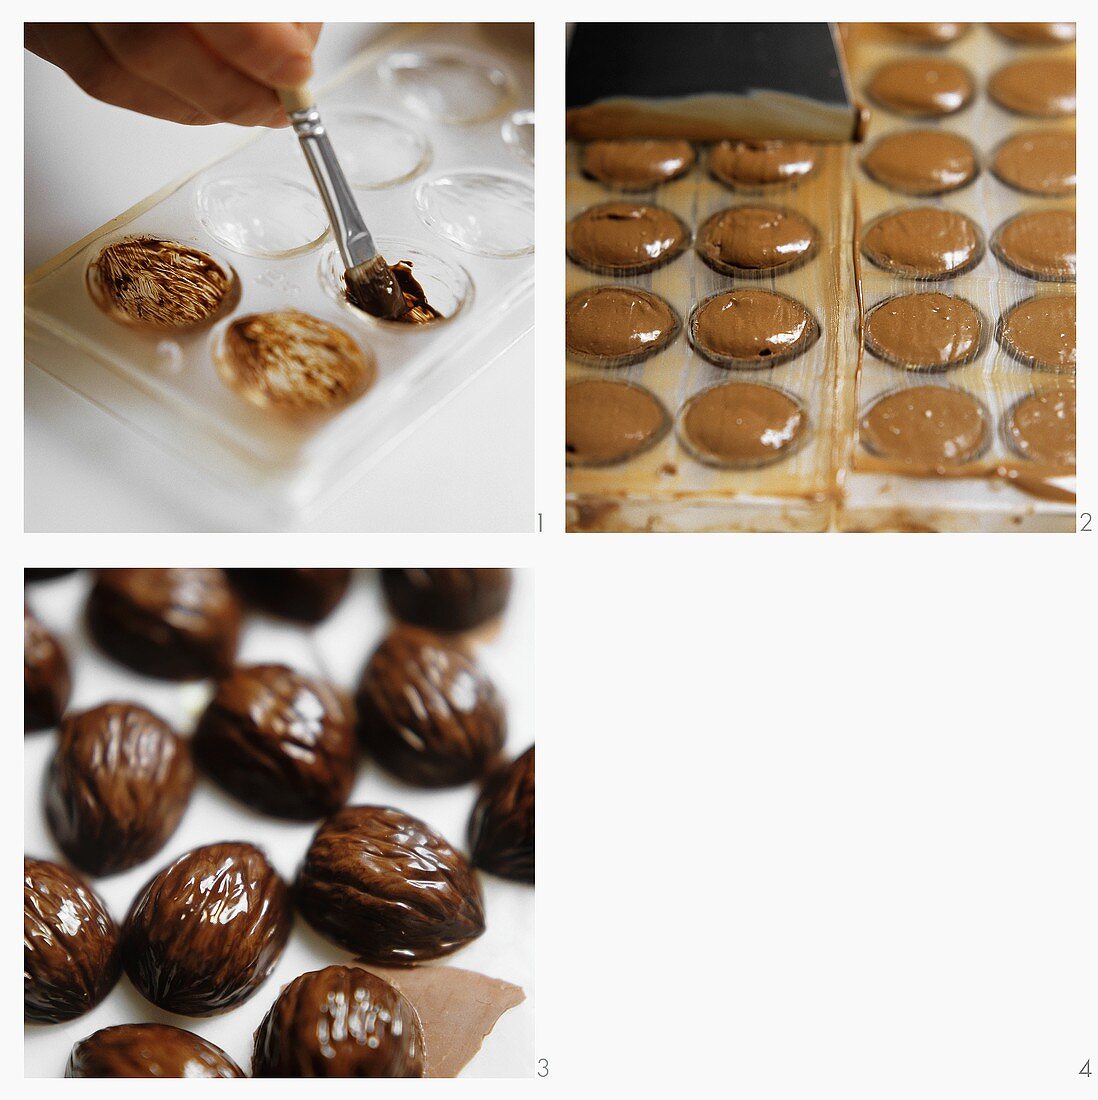 Making walnut chocolates